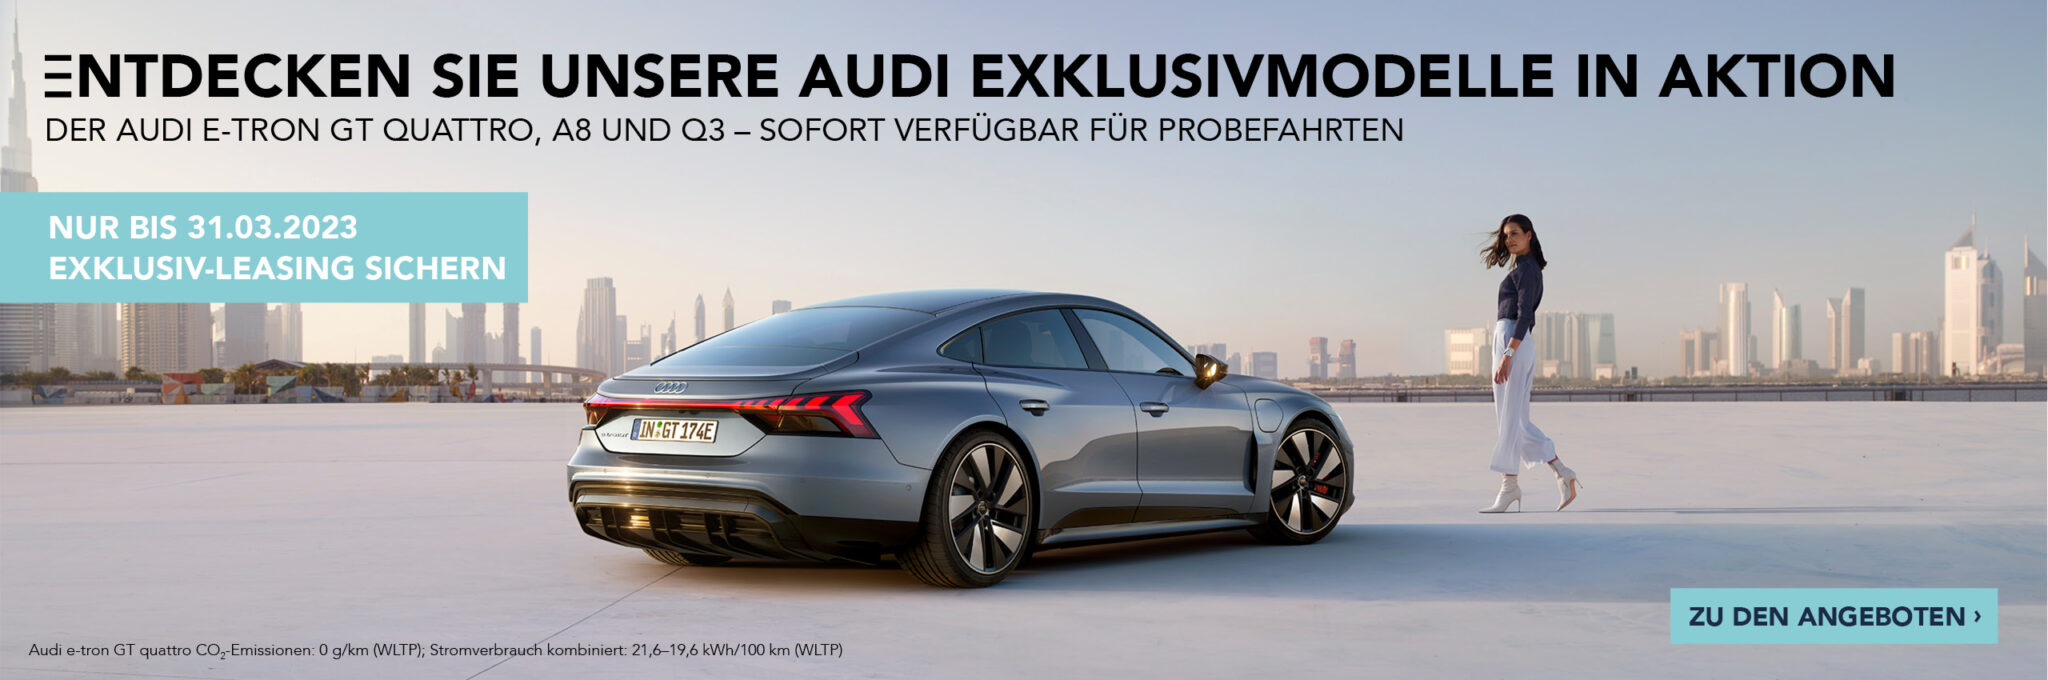 Audi Premiummodelle in Aktion